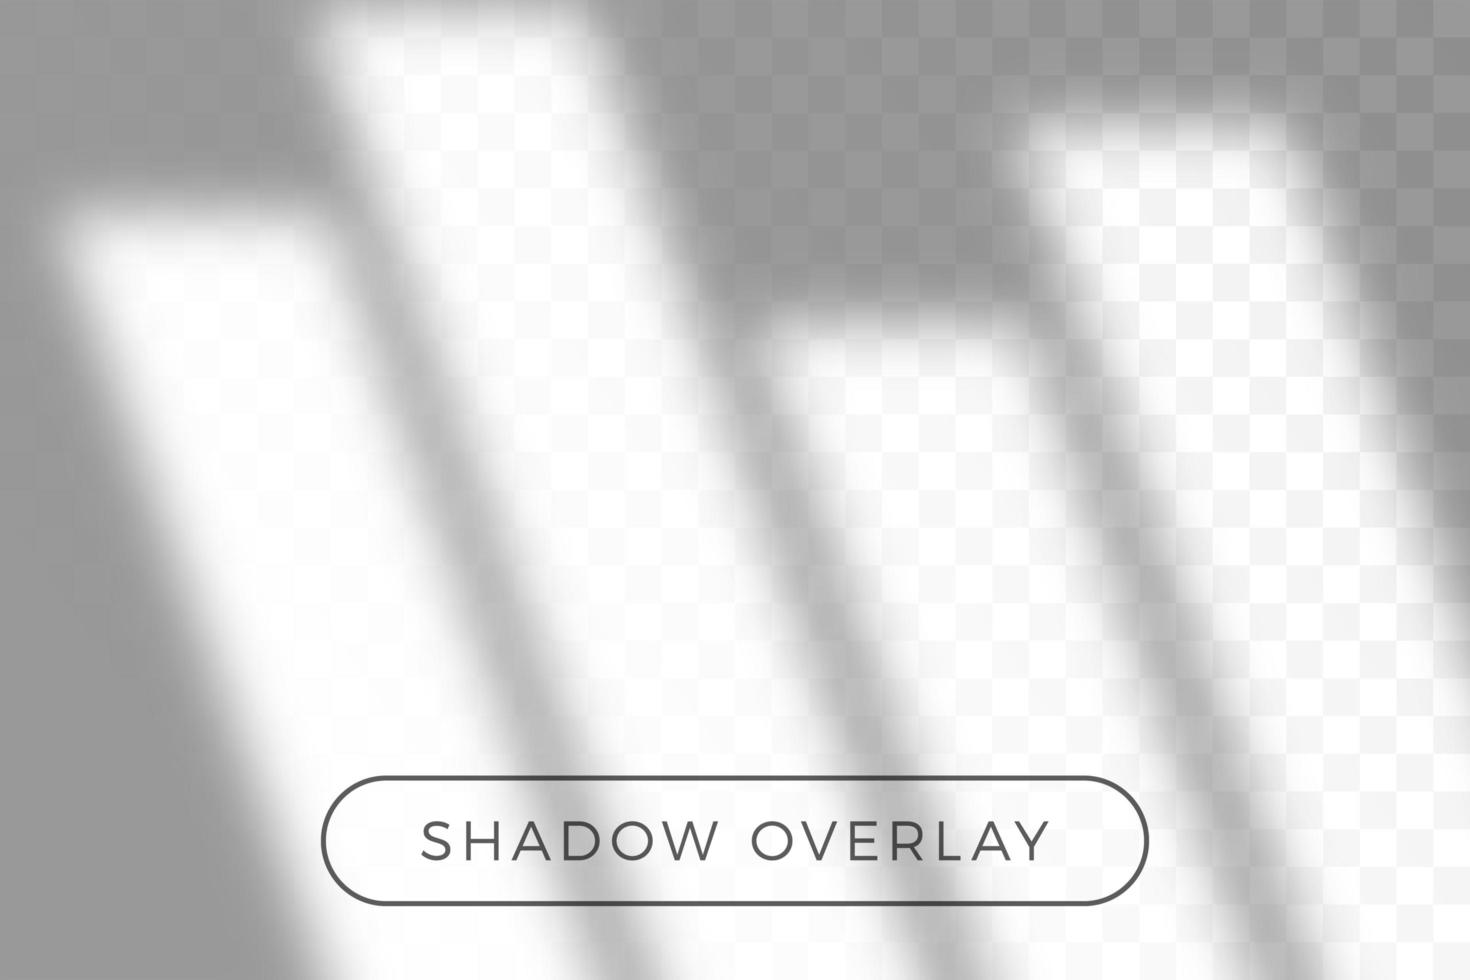 Overlay shadow of natural lighting vector